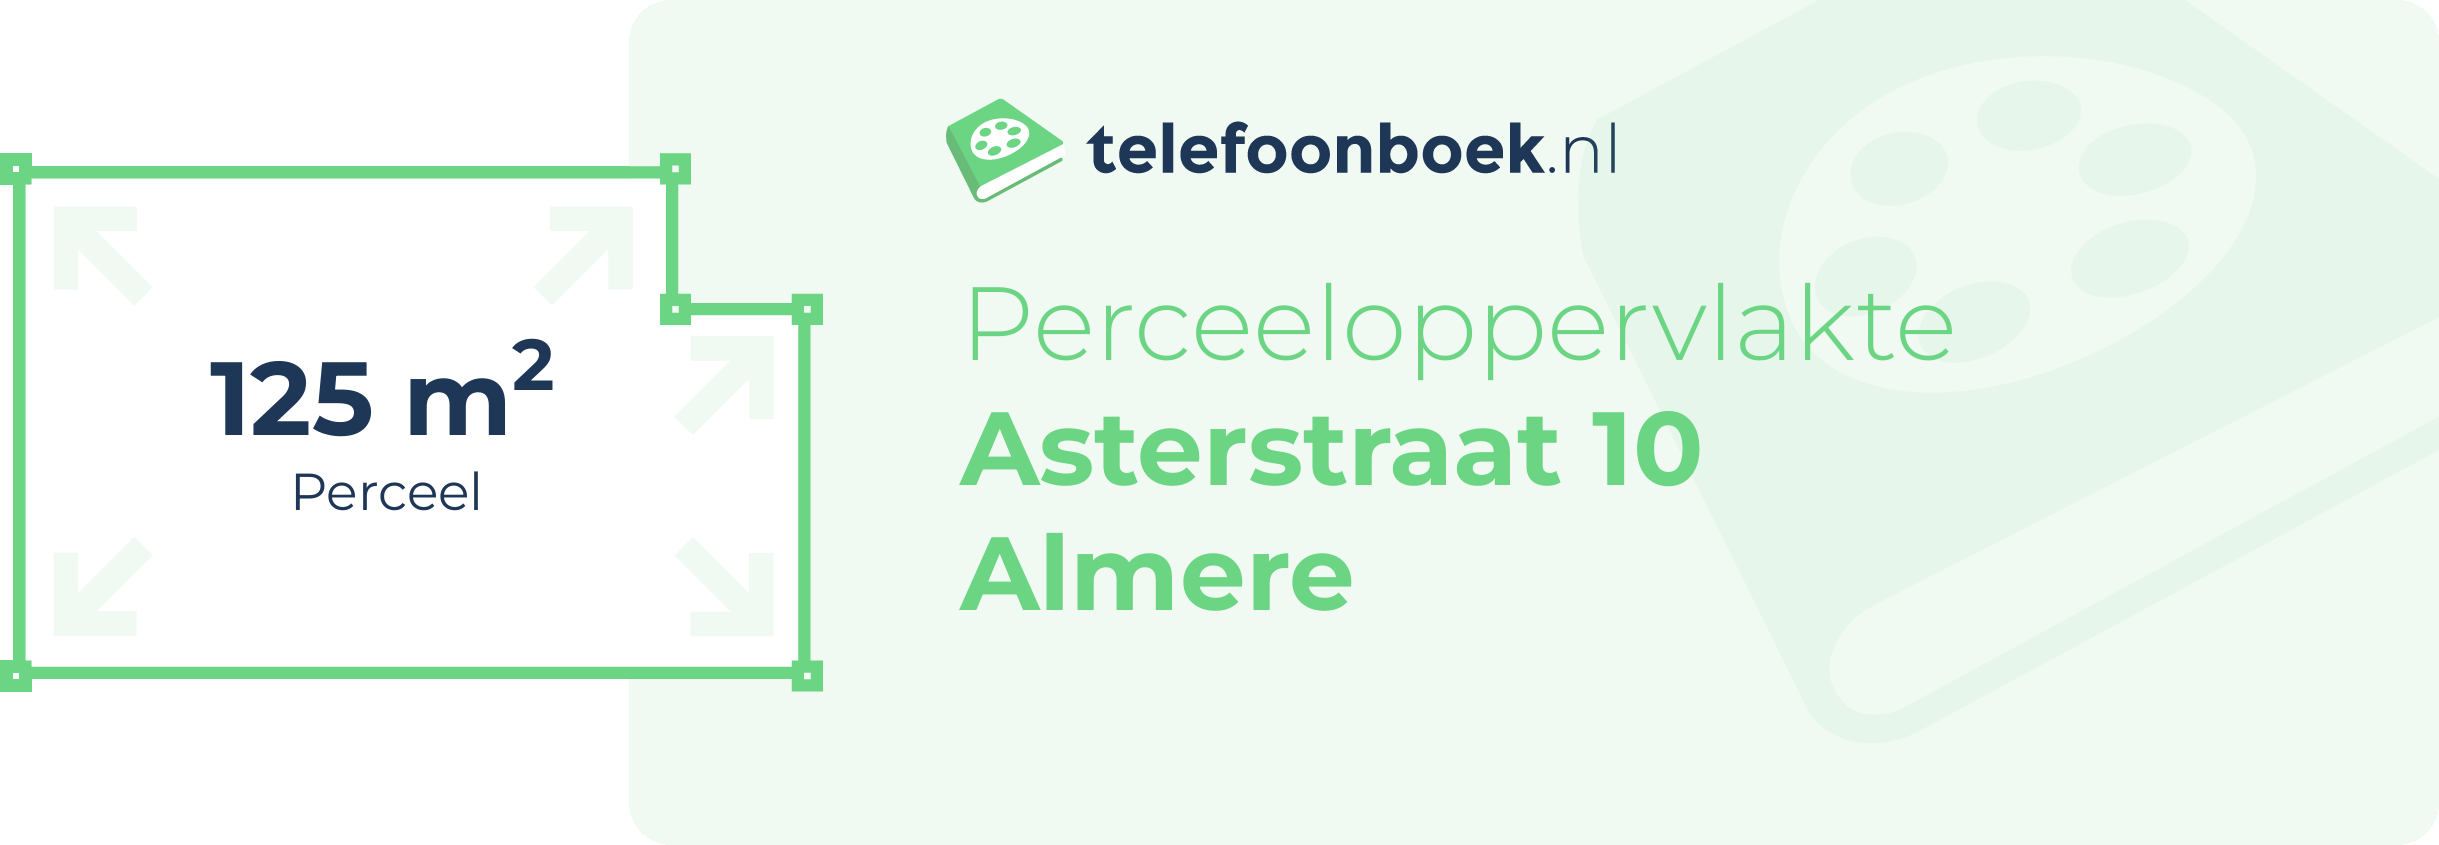 Perceeloppervlakte Asterstraat 10 Almere